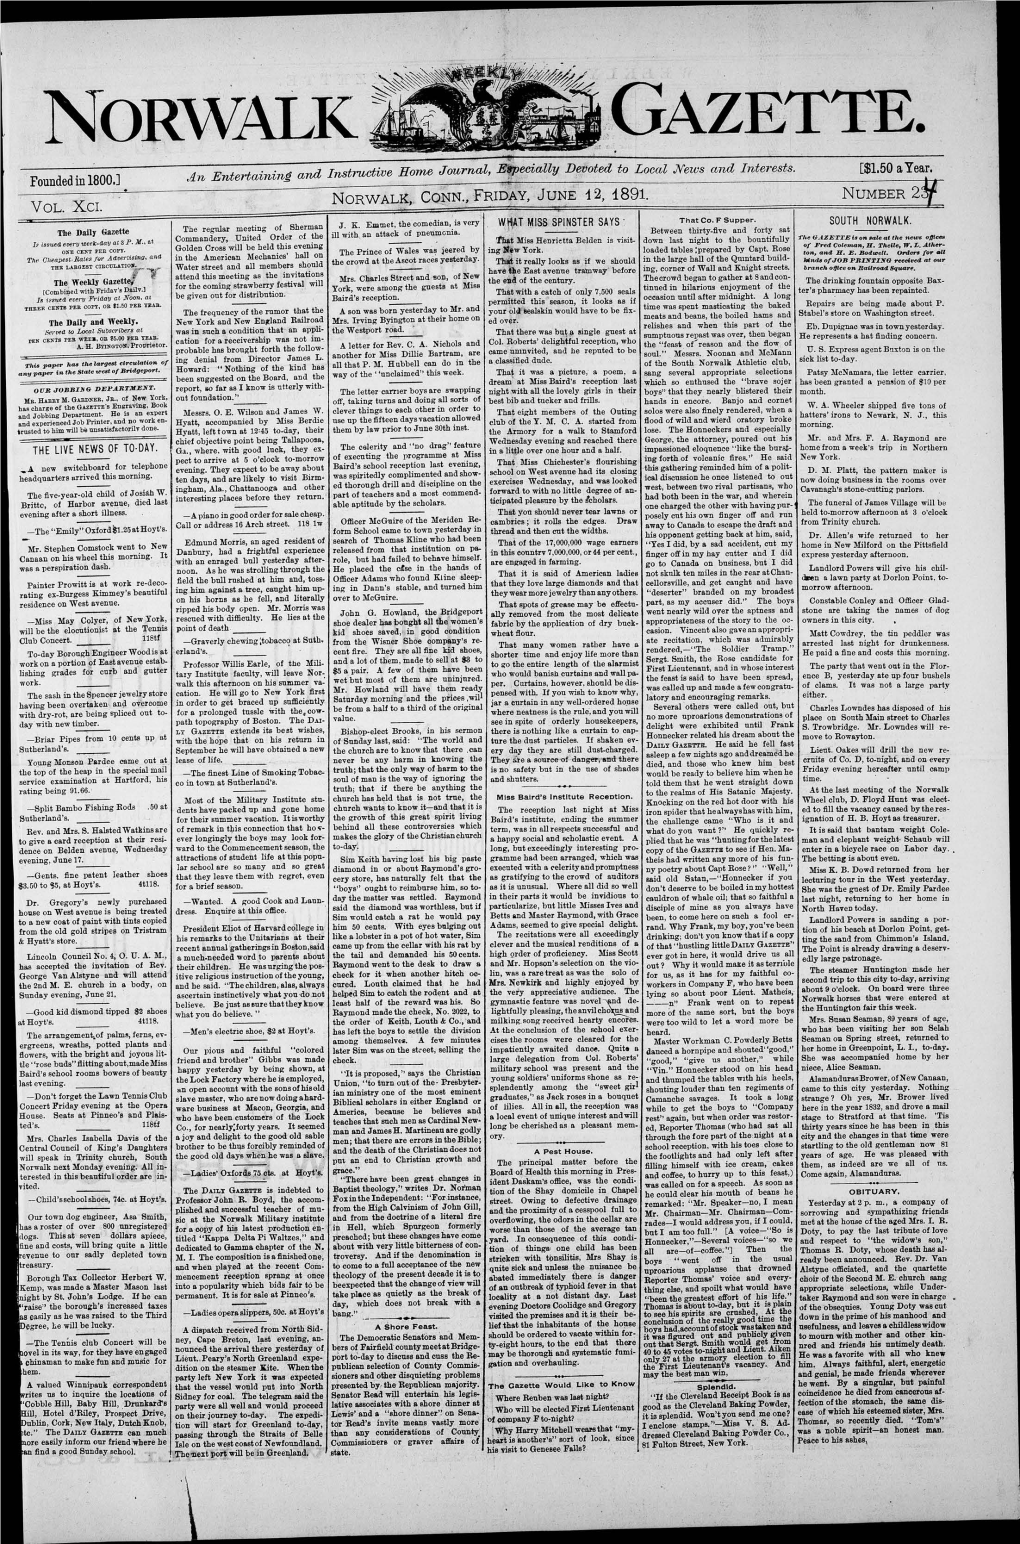 Number 2 Norwalk, Conn., Friday, June 12, 1891. Vol. Xci